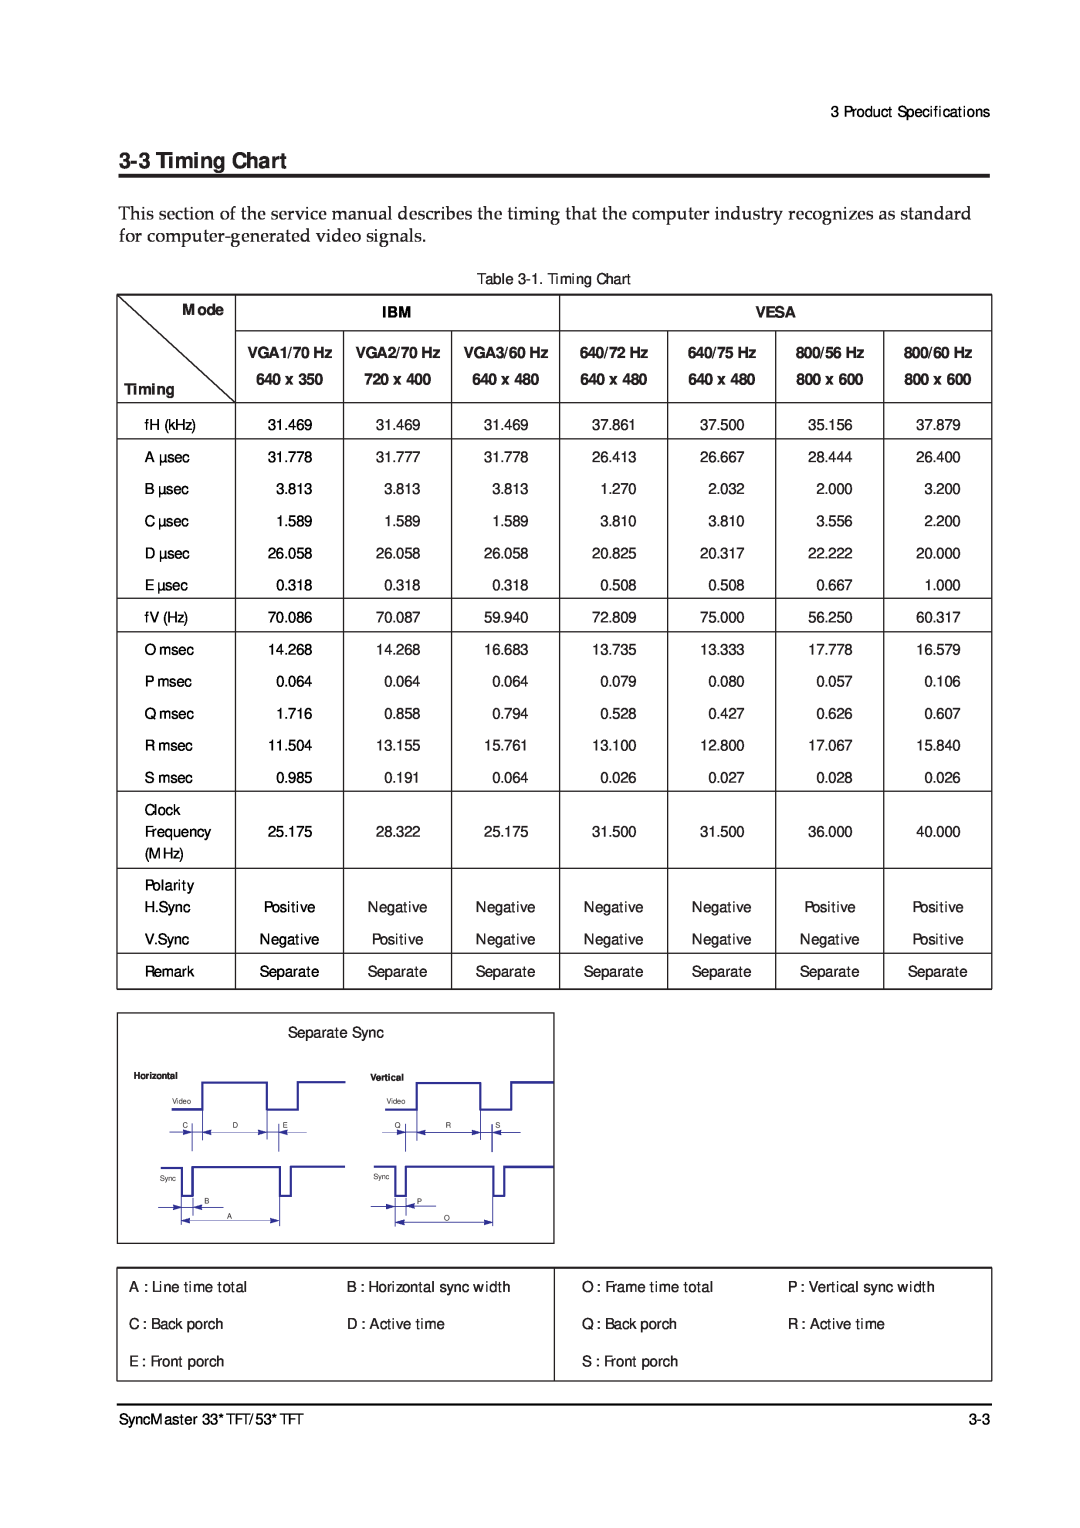 Samsung 531TFT, 530TFT, 530 TFT, 531 TFT, 330TFT, 331 TFT specifications Timing Chart, Mode 